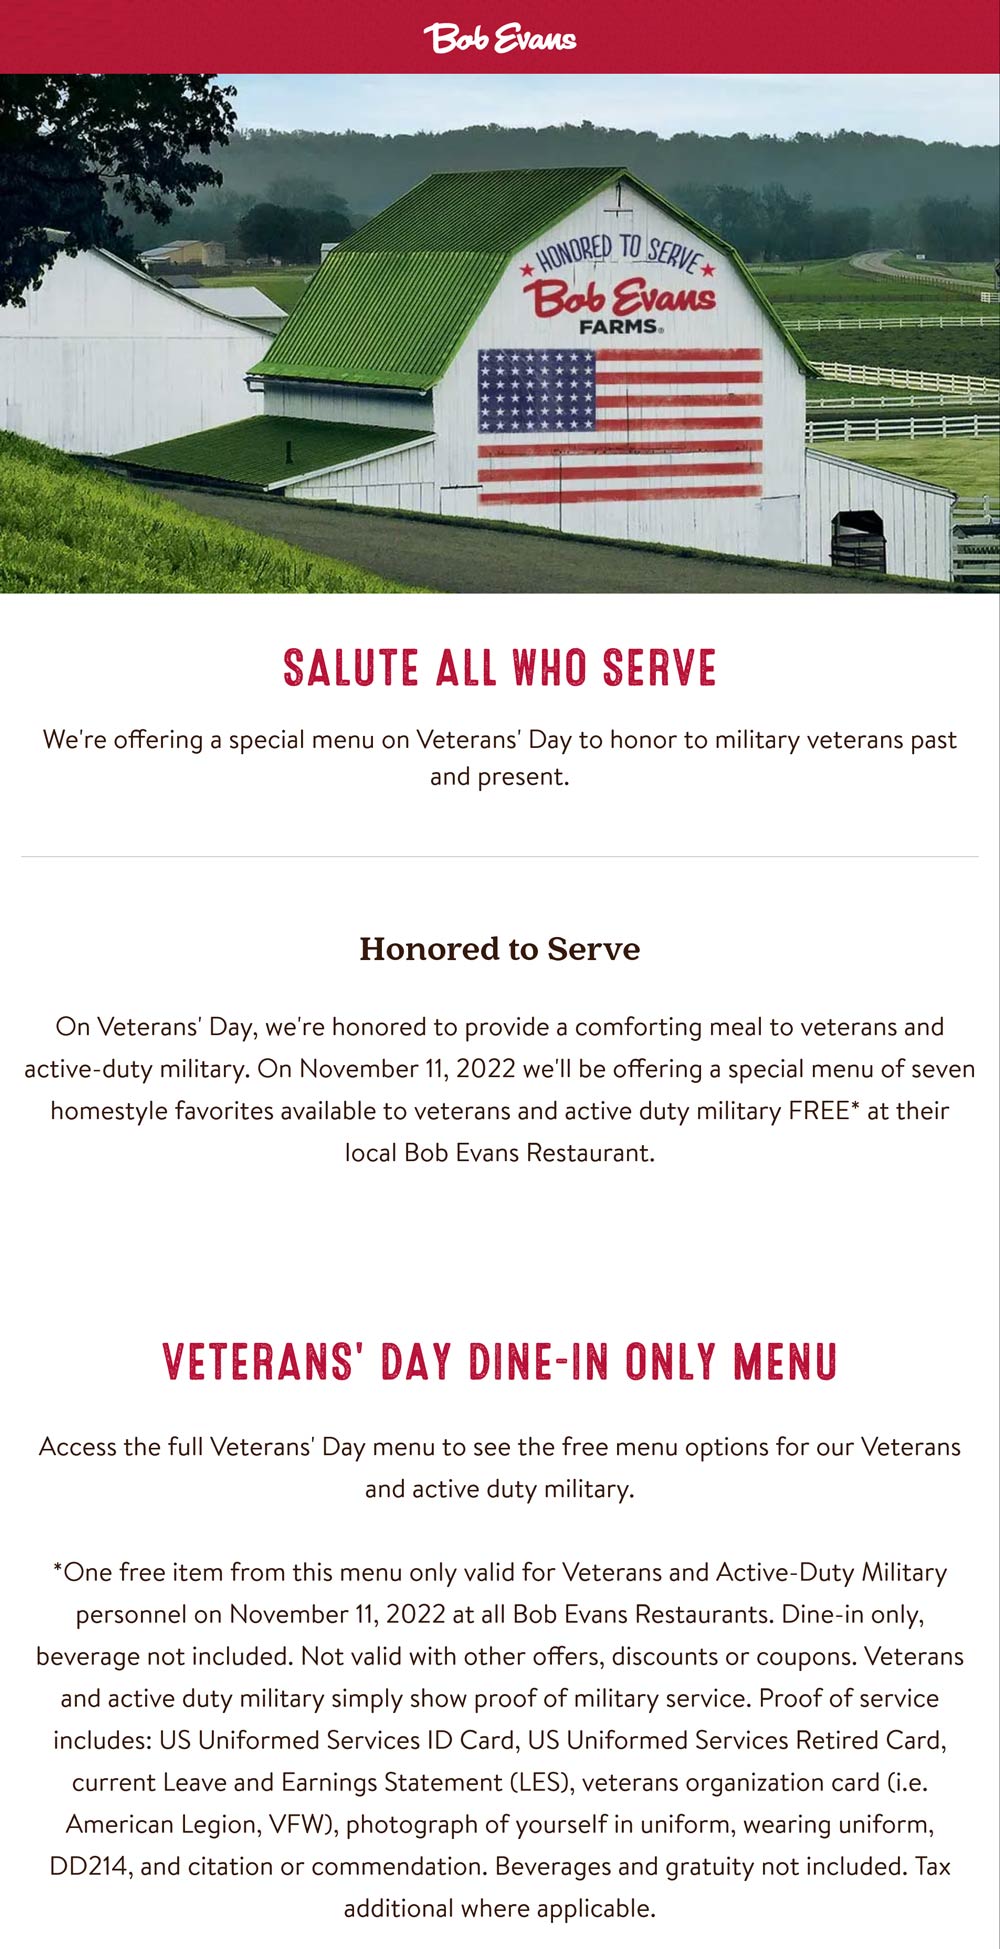 Bob Evans restaurants Coupon  Veterans & military enjoy a free meal today at Bob Evans #bobevans 